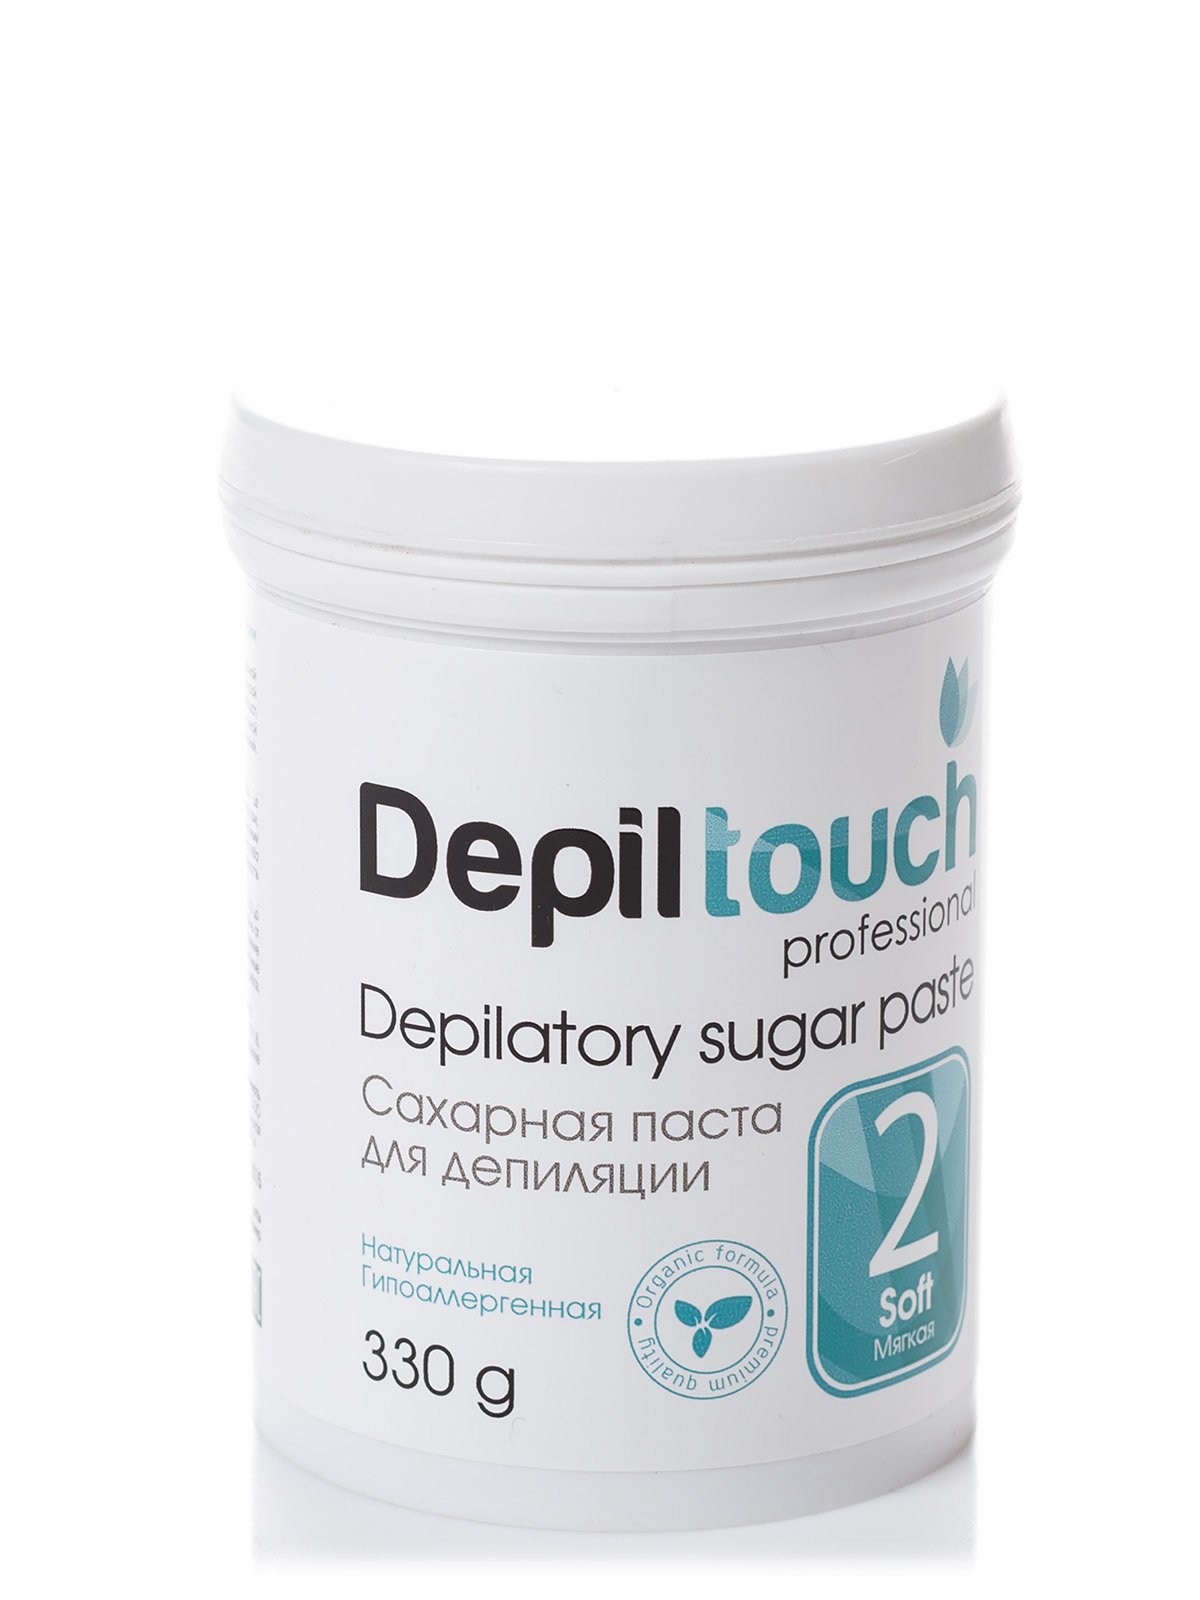 Паста сахарная для депиляции мягкая Depiltouch professional (330 г) | 3963238